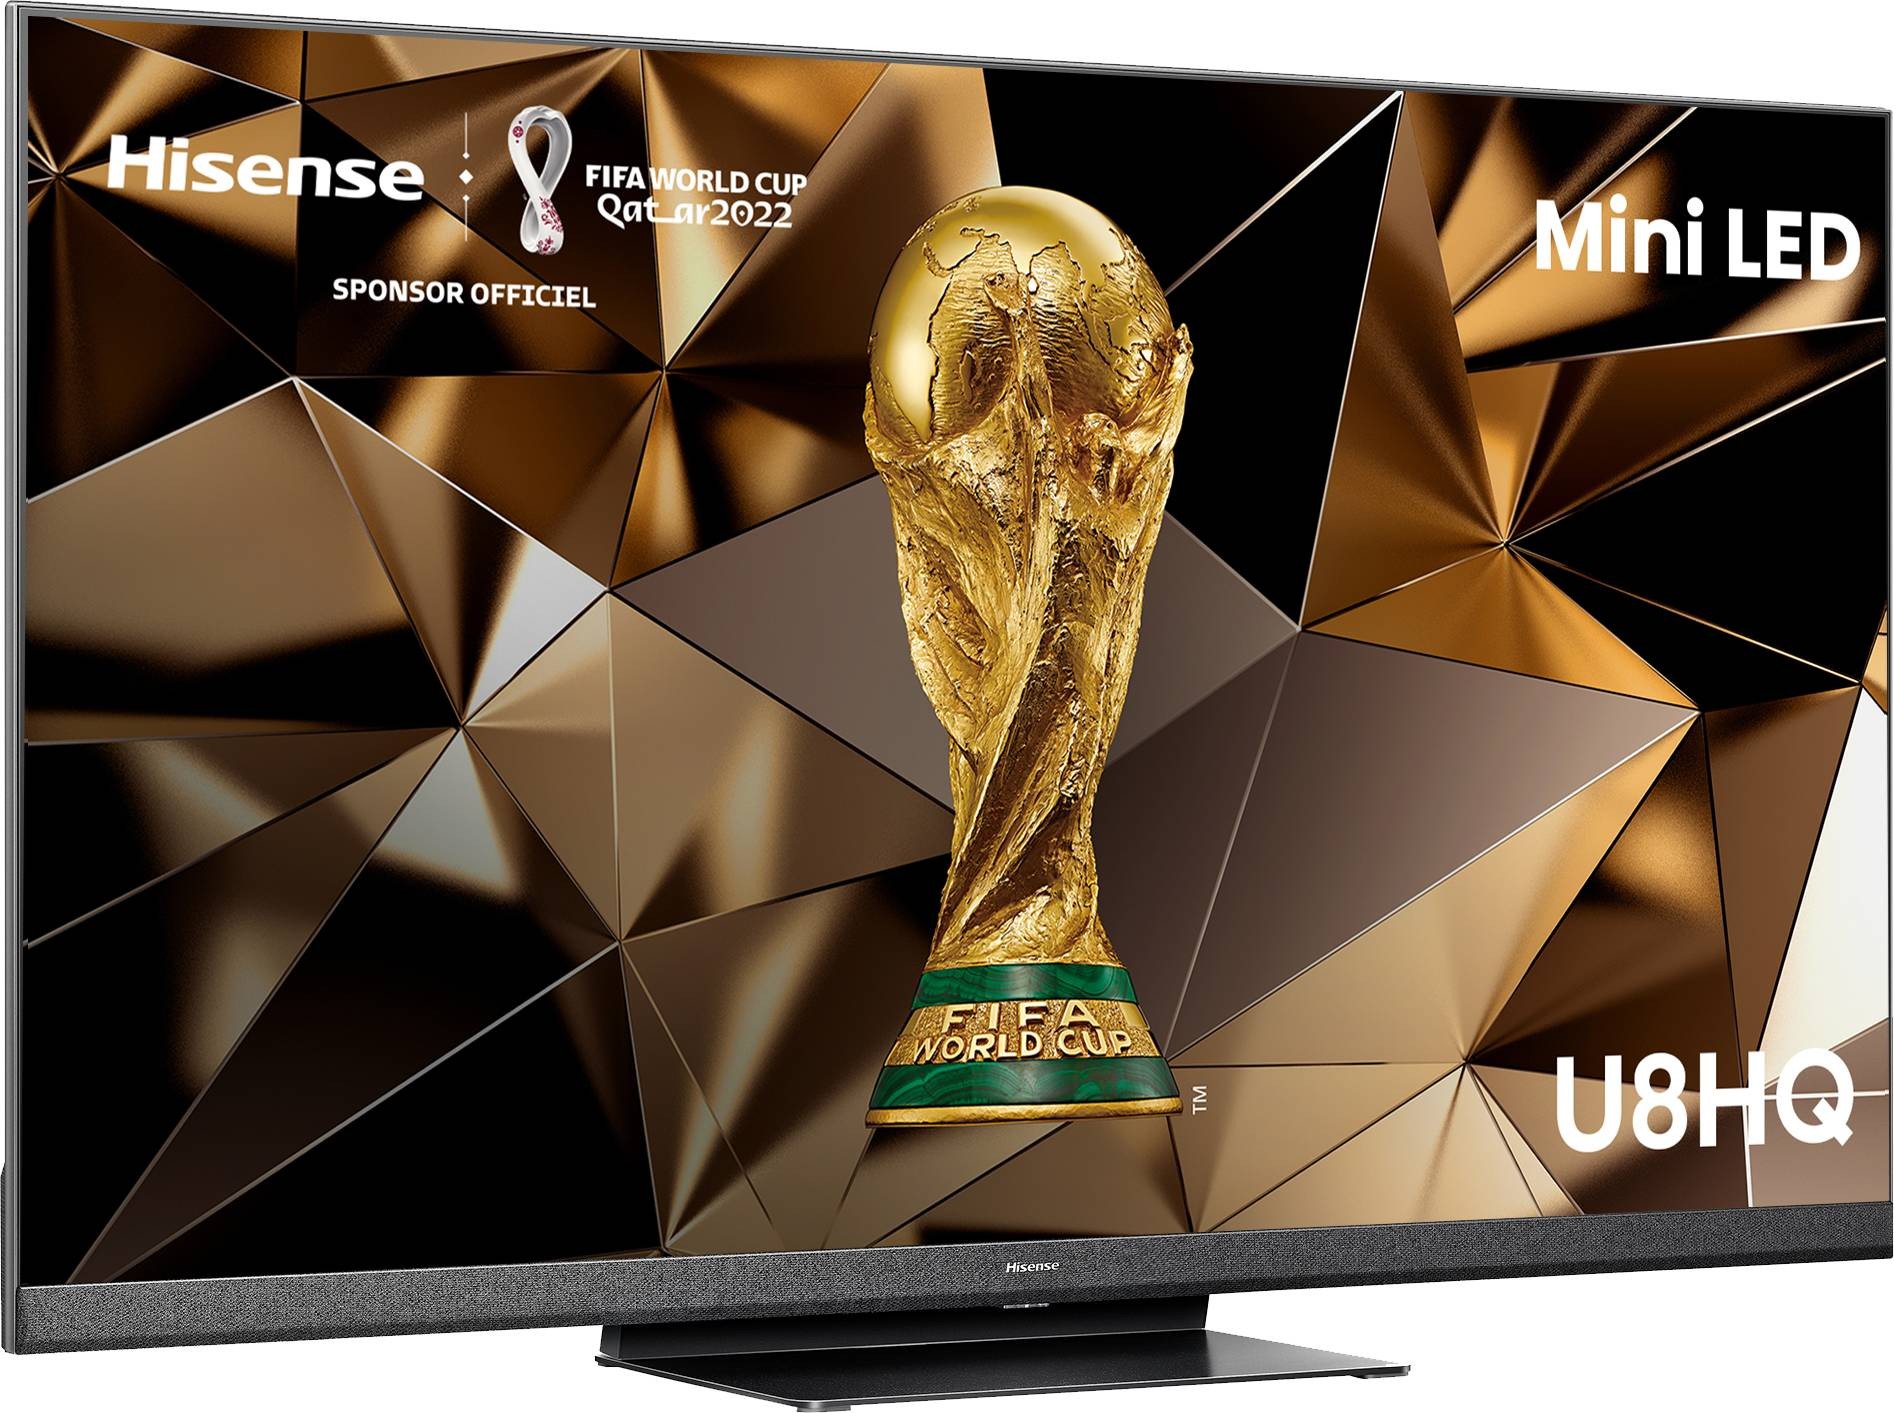 HISENSE TV Mini LED 139 cm 120Hz Dolby Atmos 55" - 55U8H